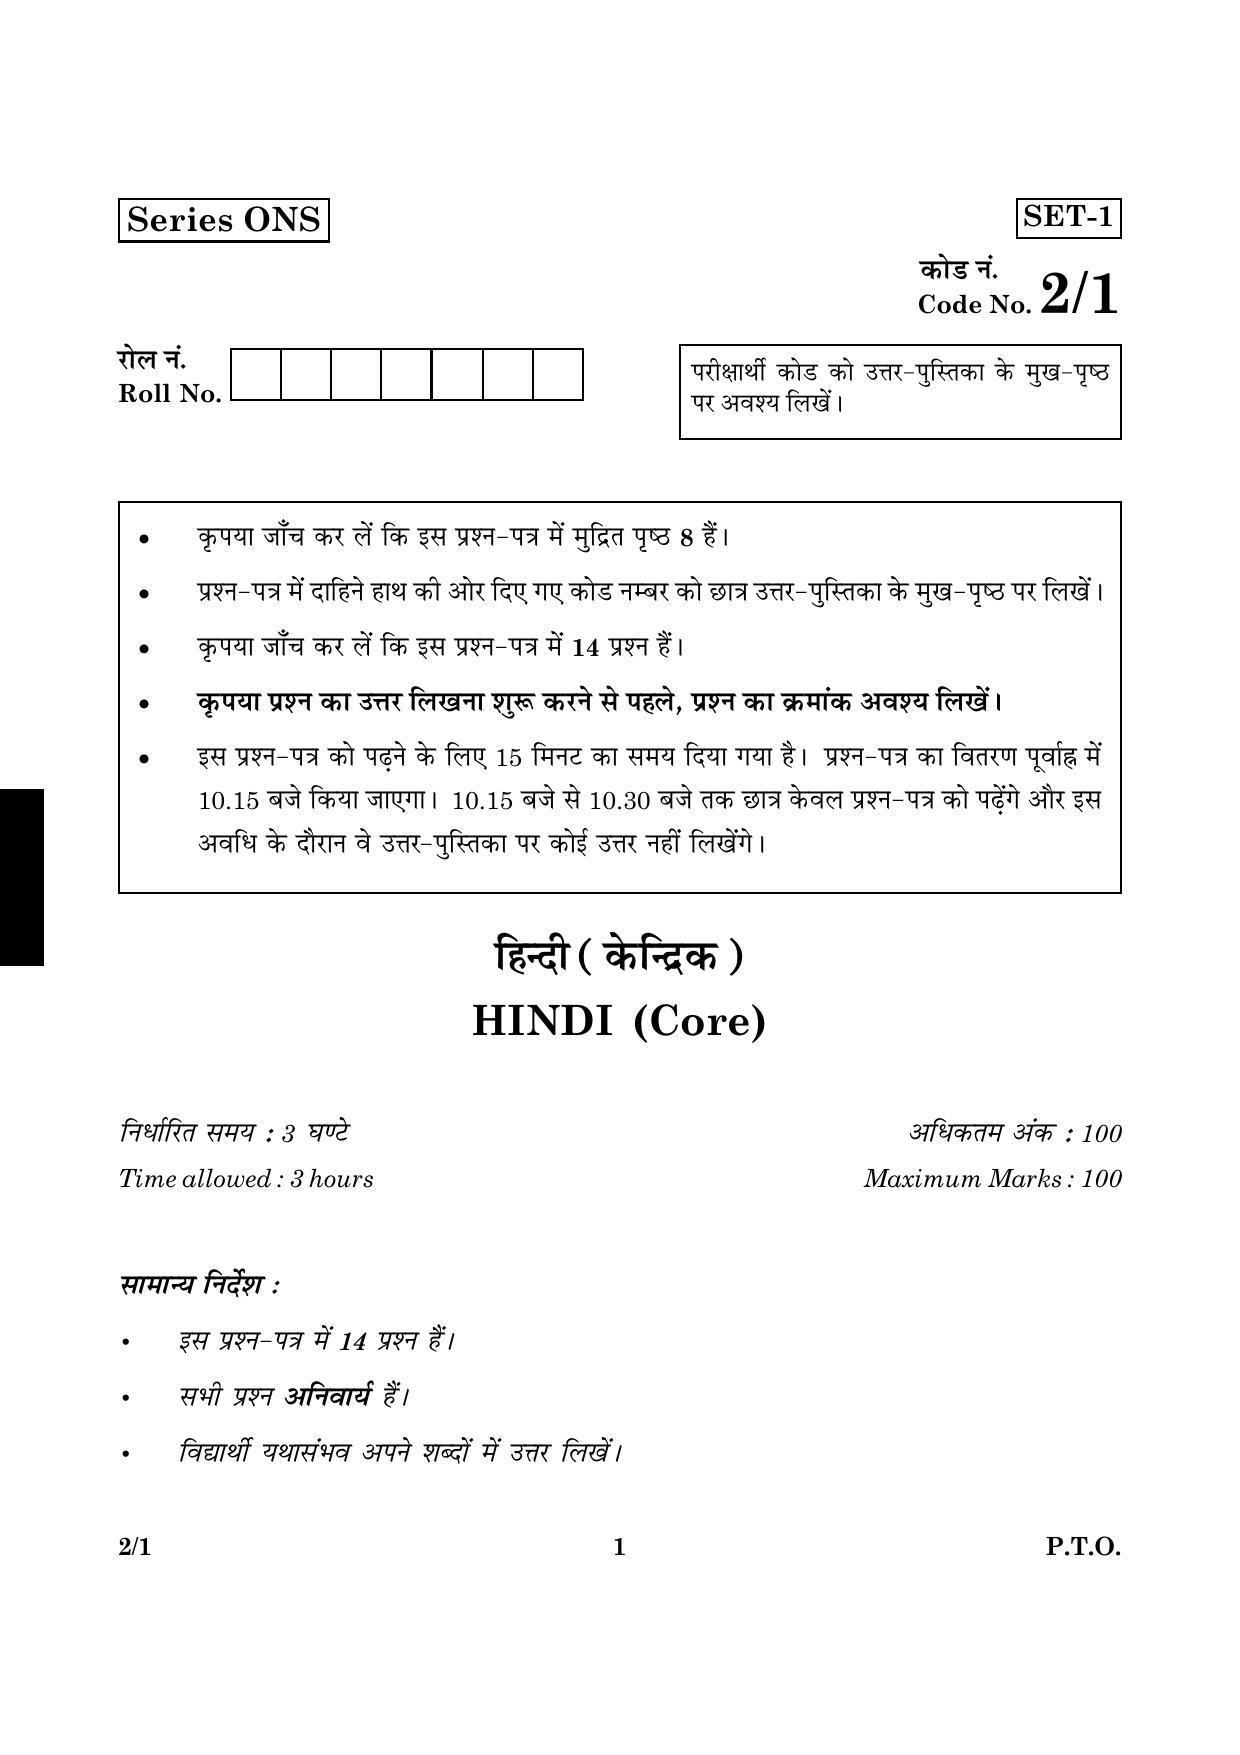 CBSE Class 12 002 Set 1 Hindi (Core) 2016 Question Paper - Page 1